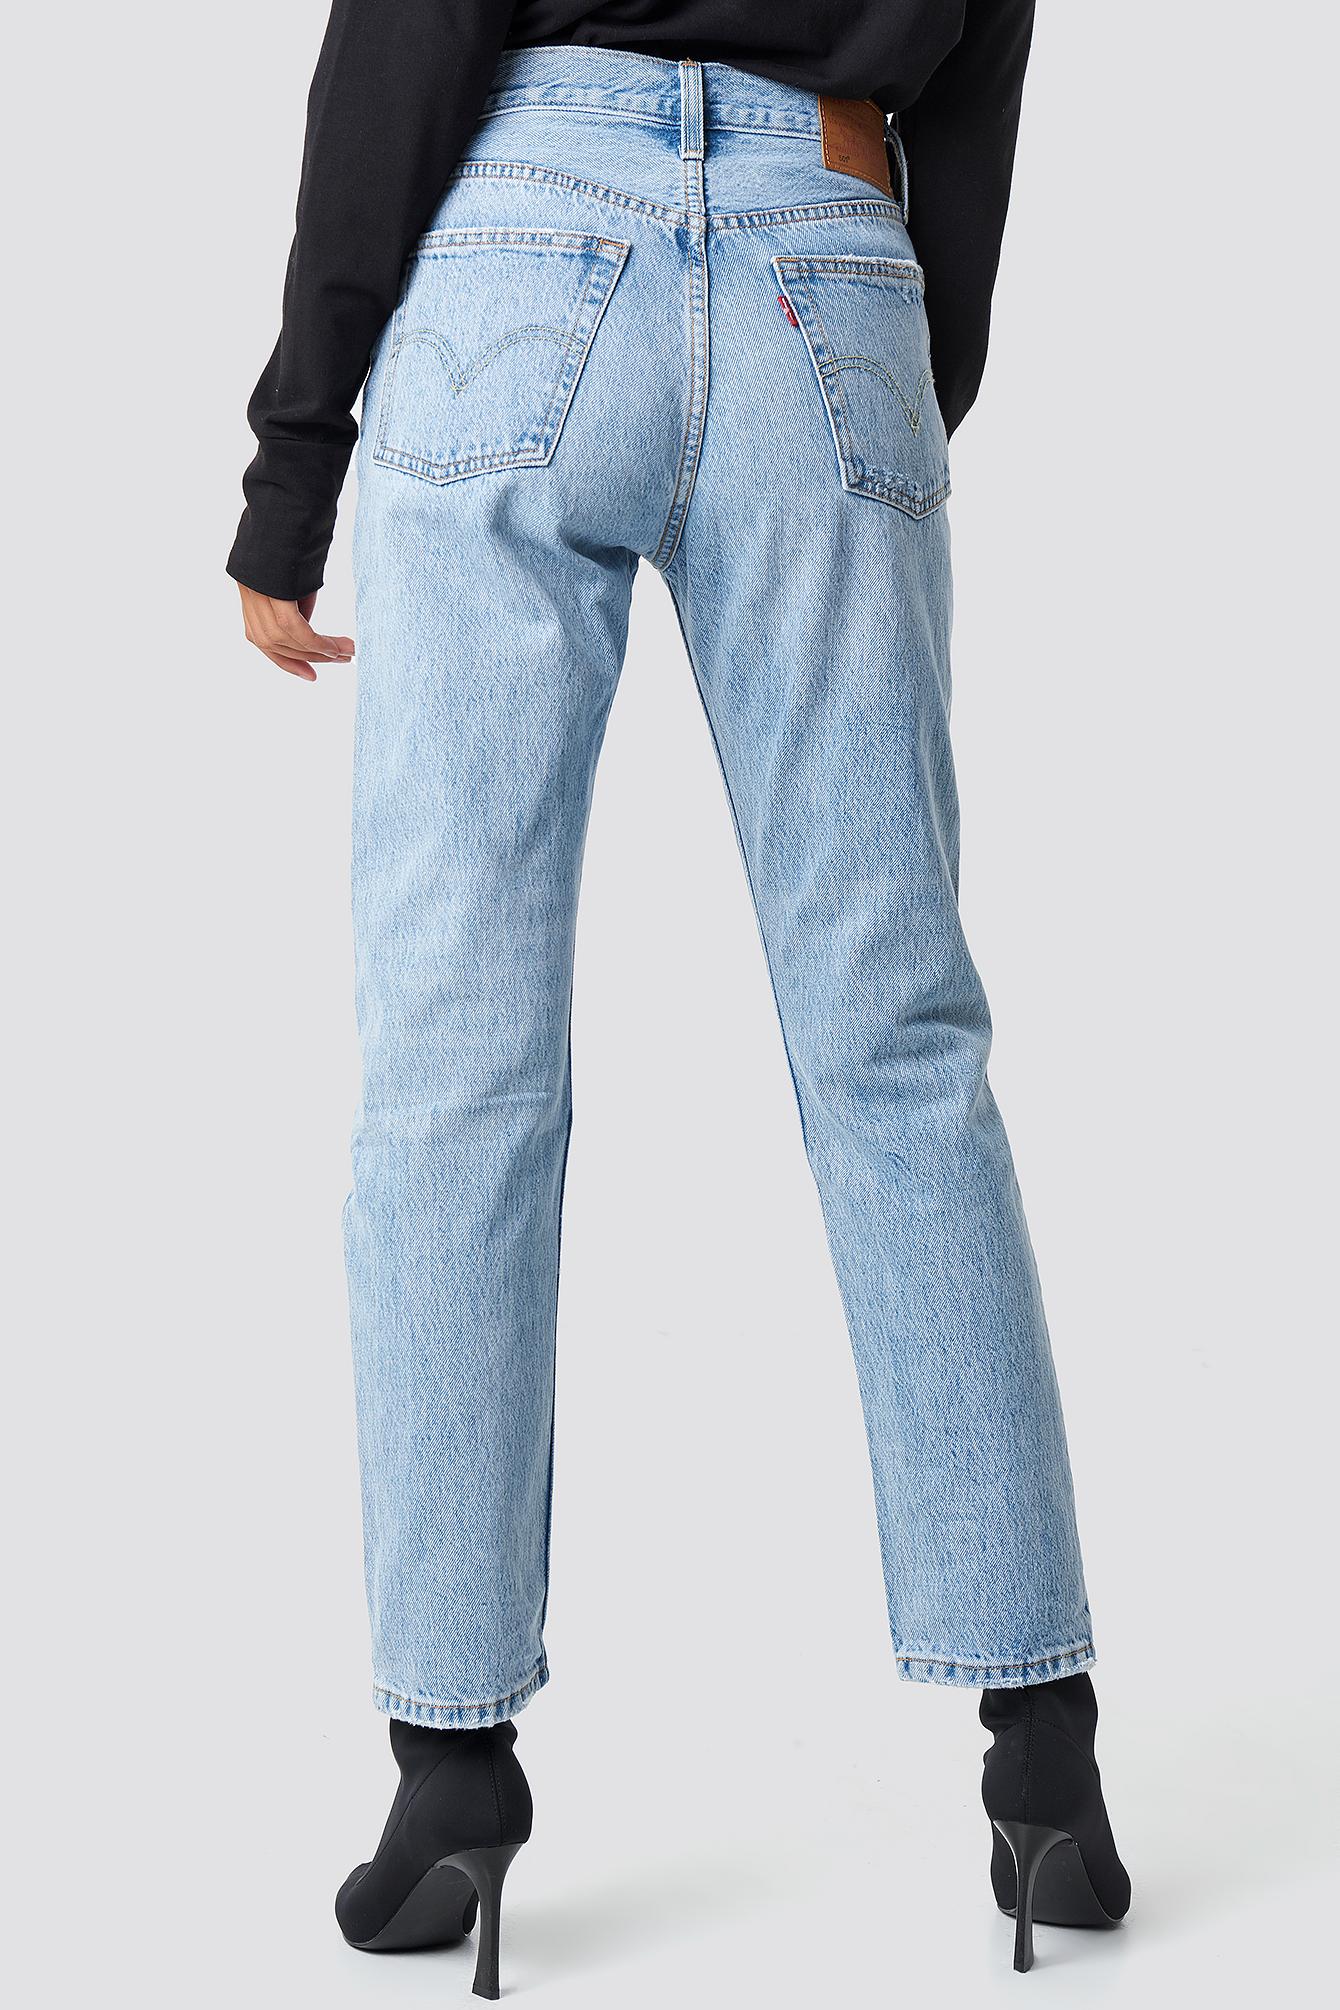 501 crop jeans lovefool